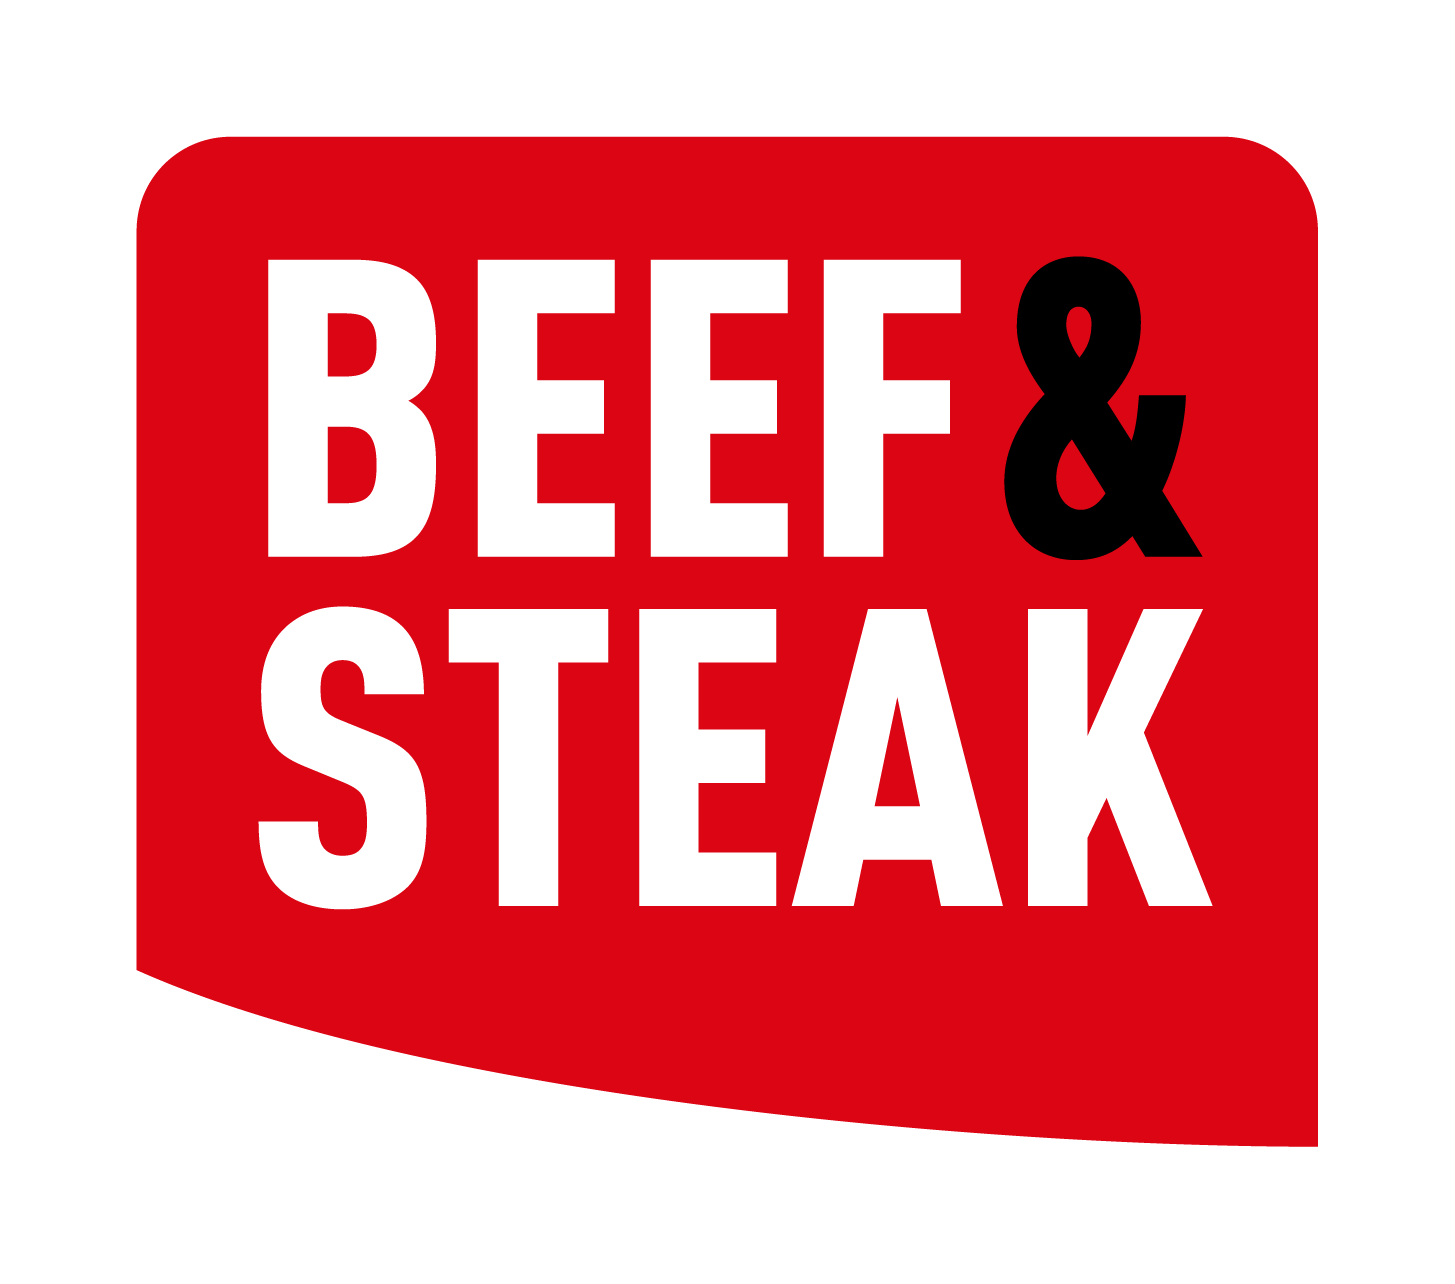 Gourmet (8 - Beef & Steak